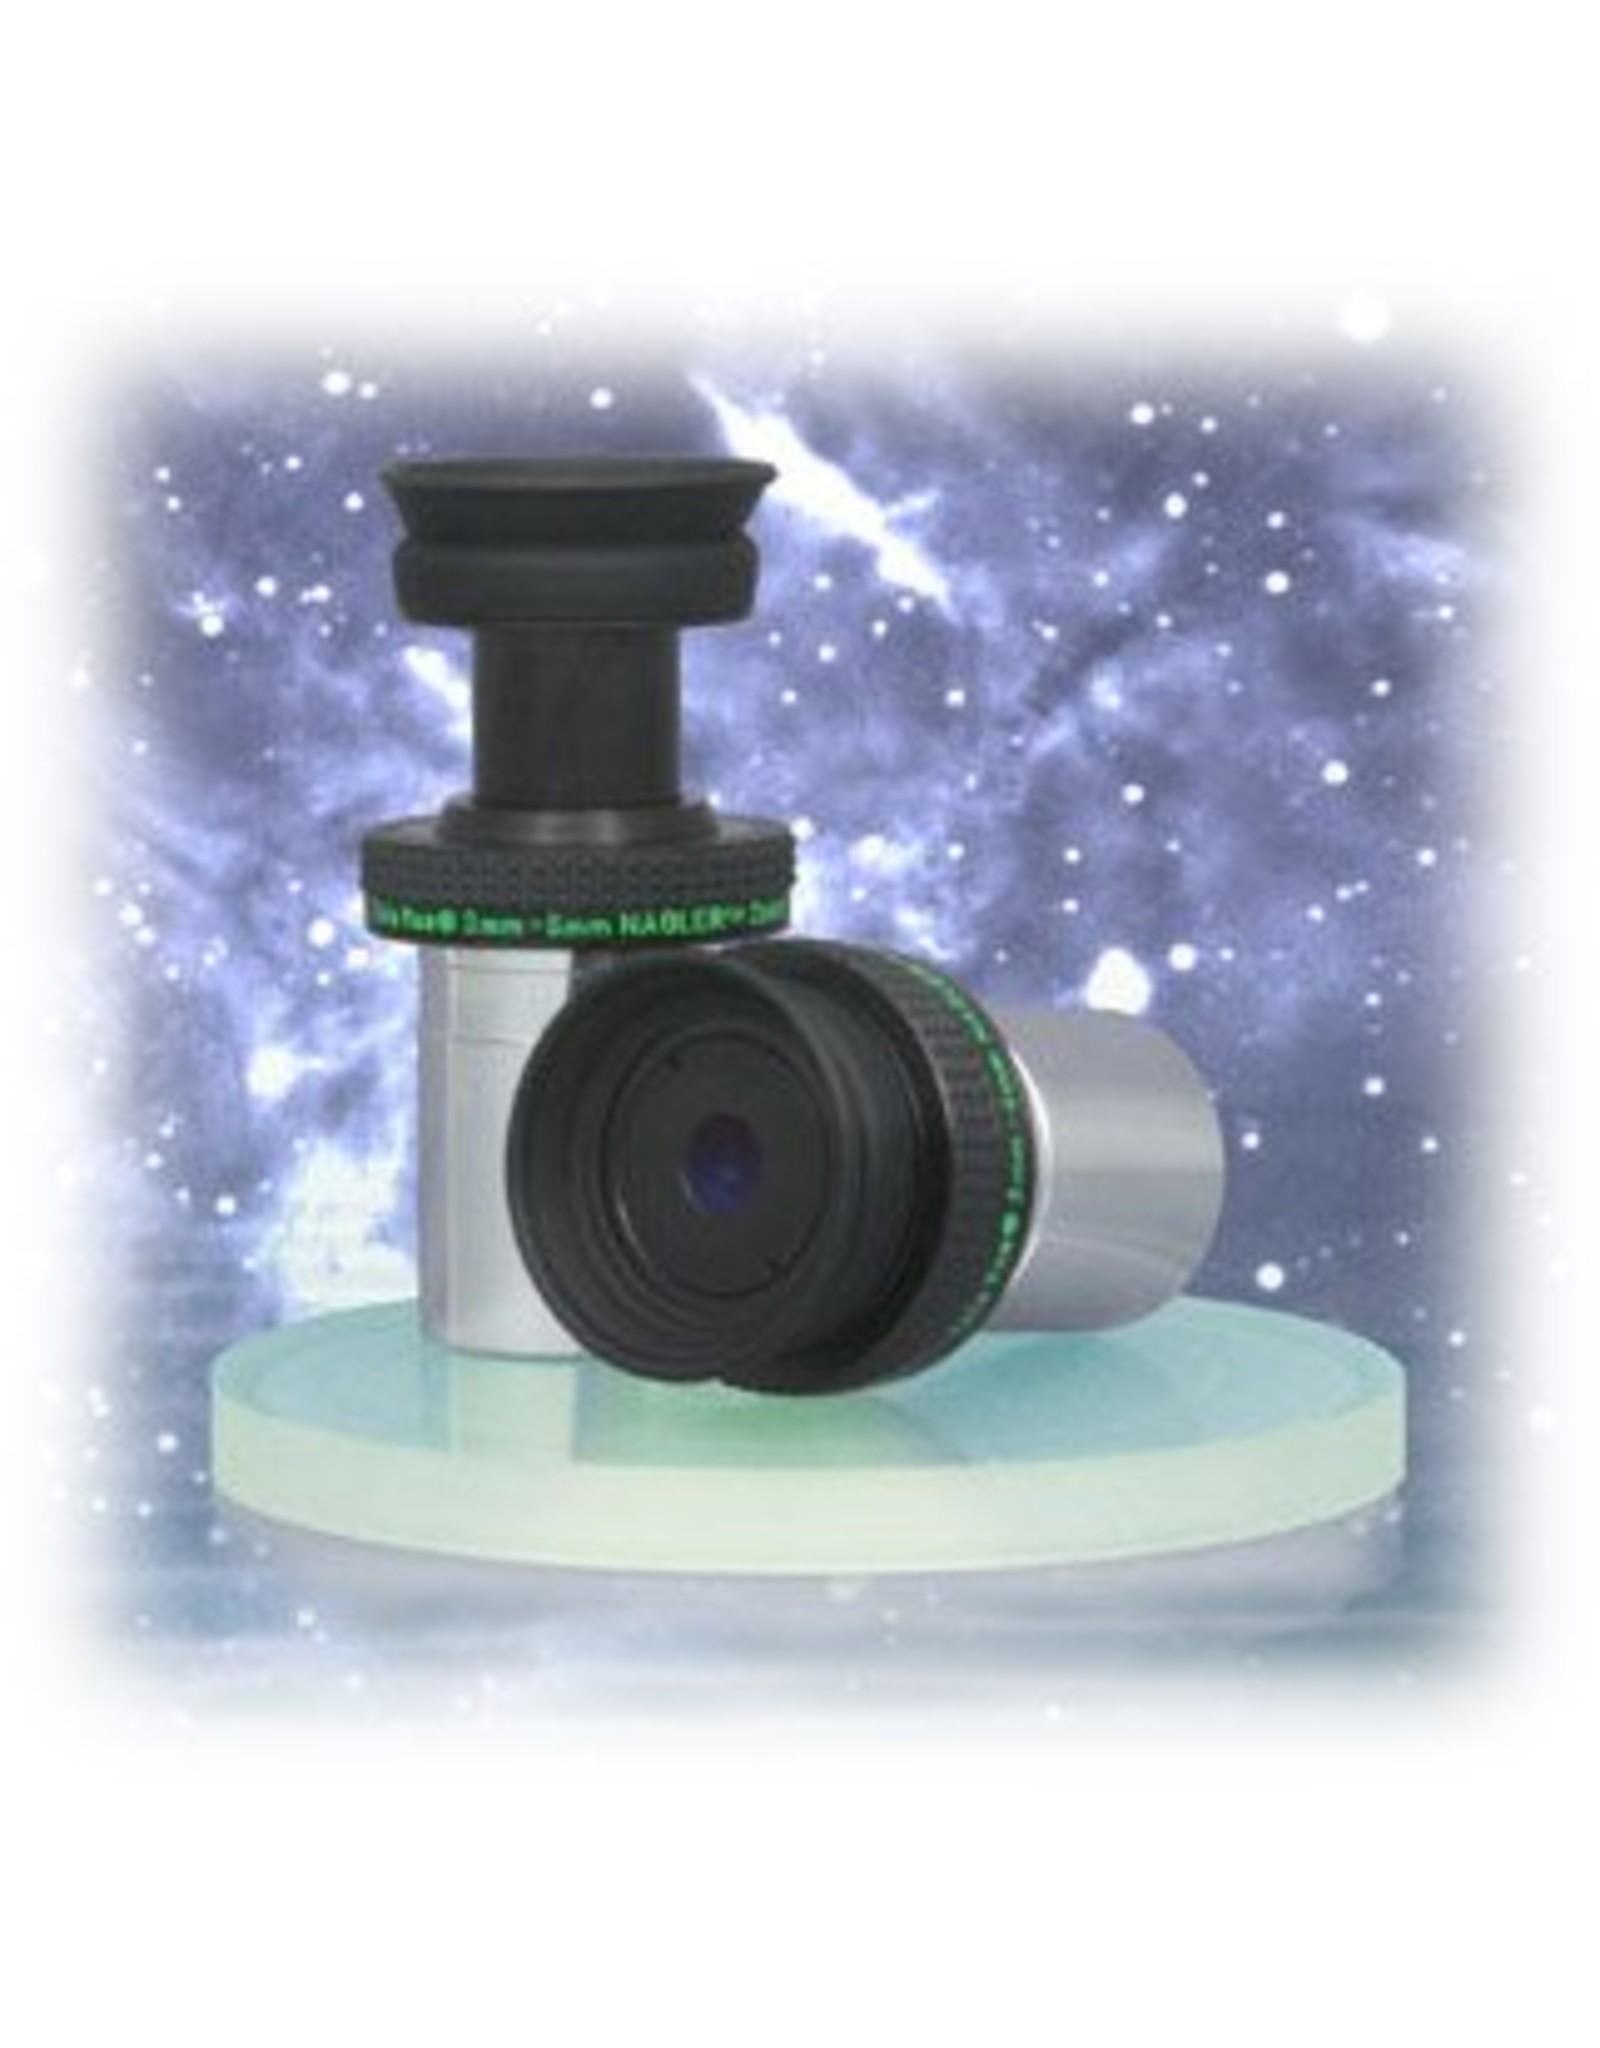 Tele Vue 3-6mm Click-Stop Zoom Nagler Eyepiece - 1.25